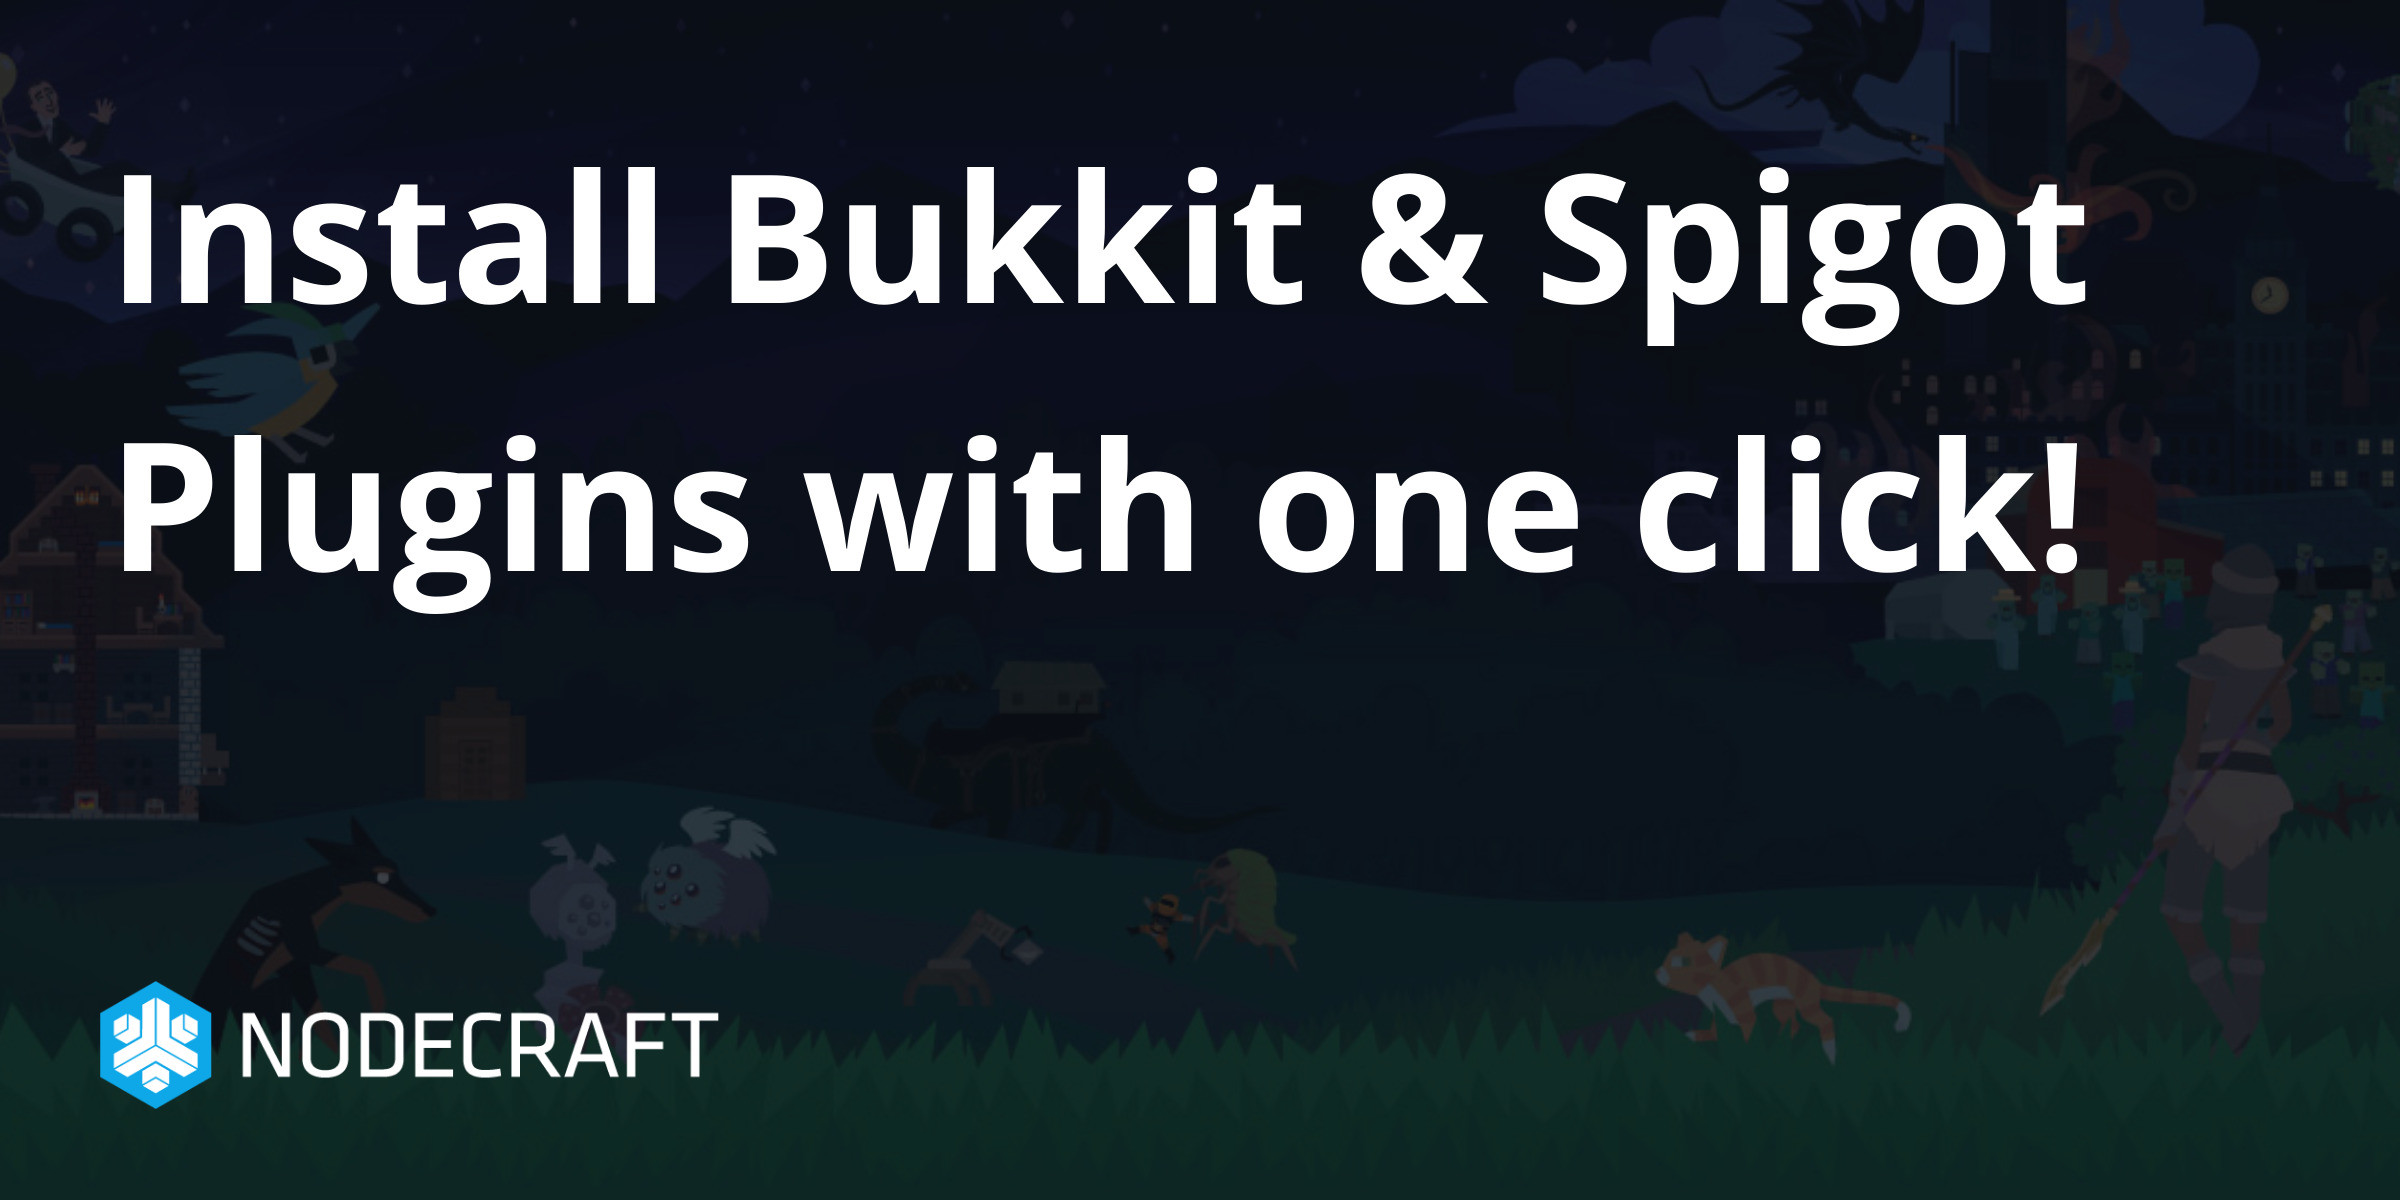 Install Bukkit & Spigot Plugins with one click!